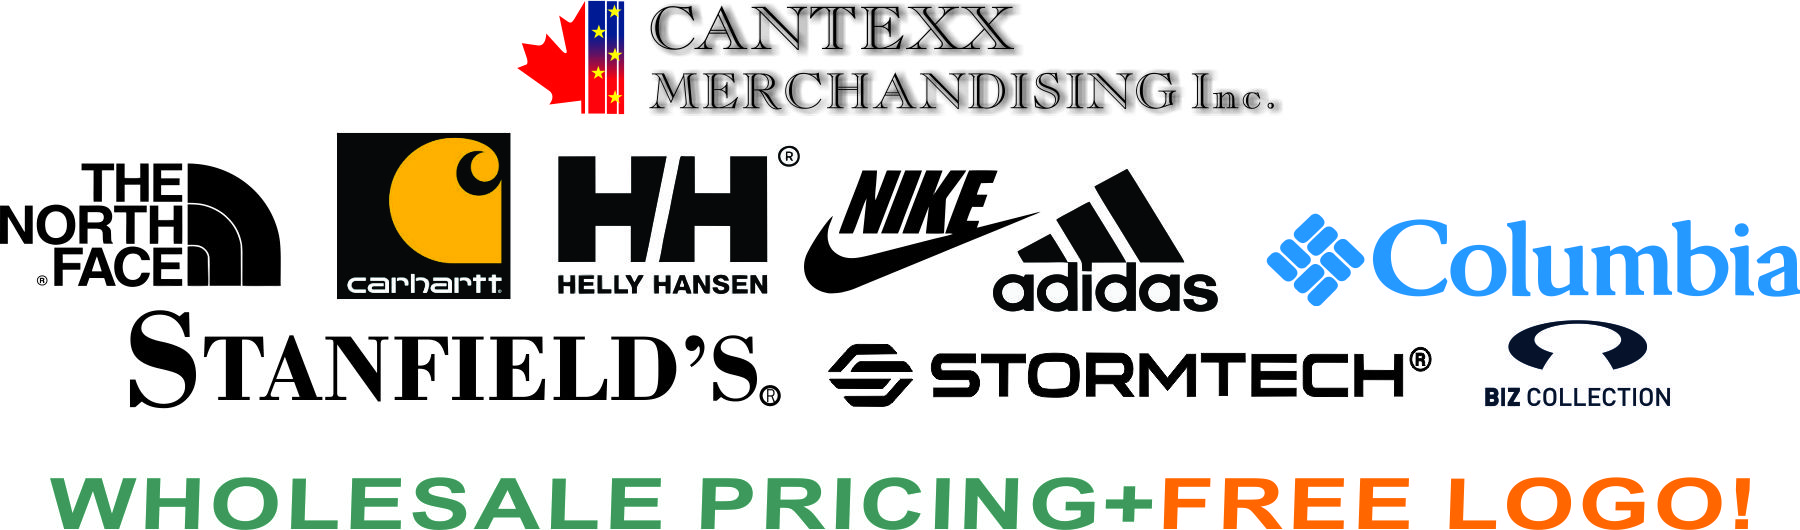 Cantexx Merchandising Inc.'s Logo